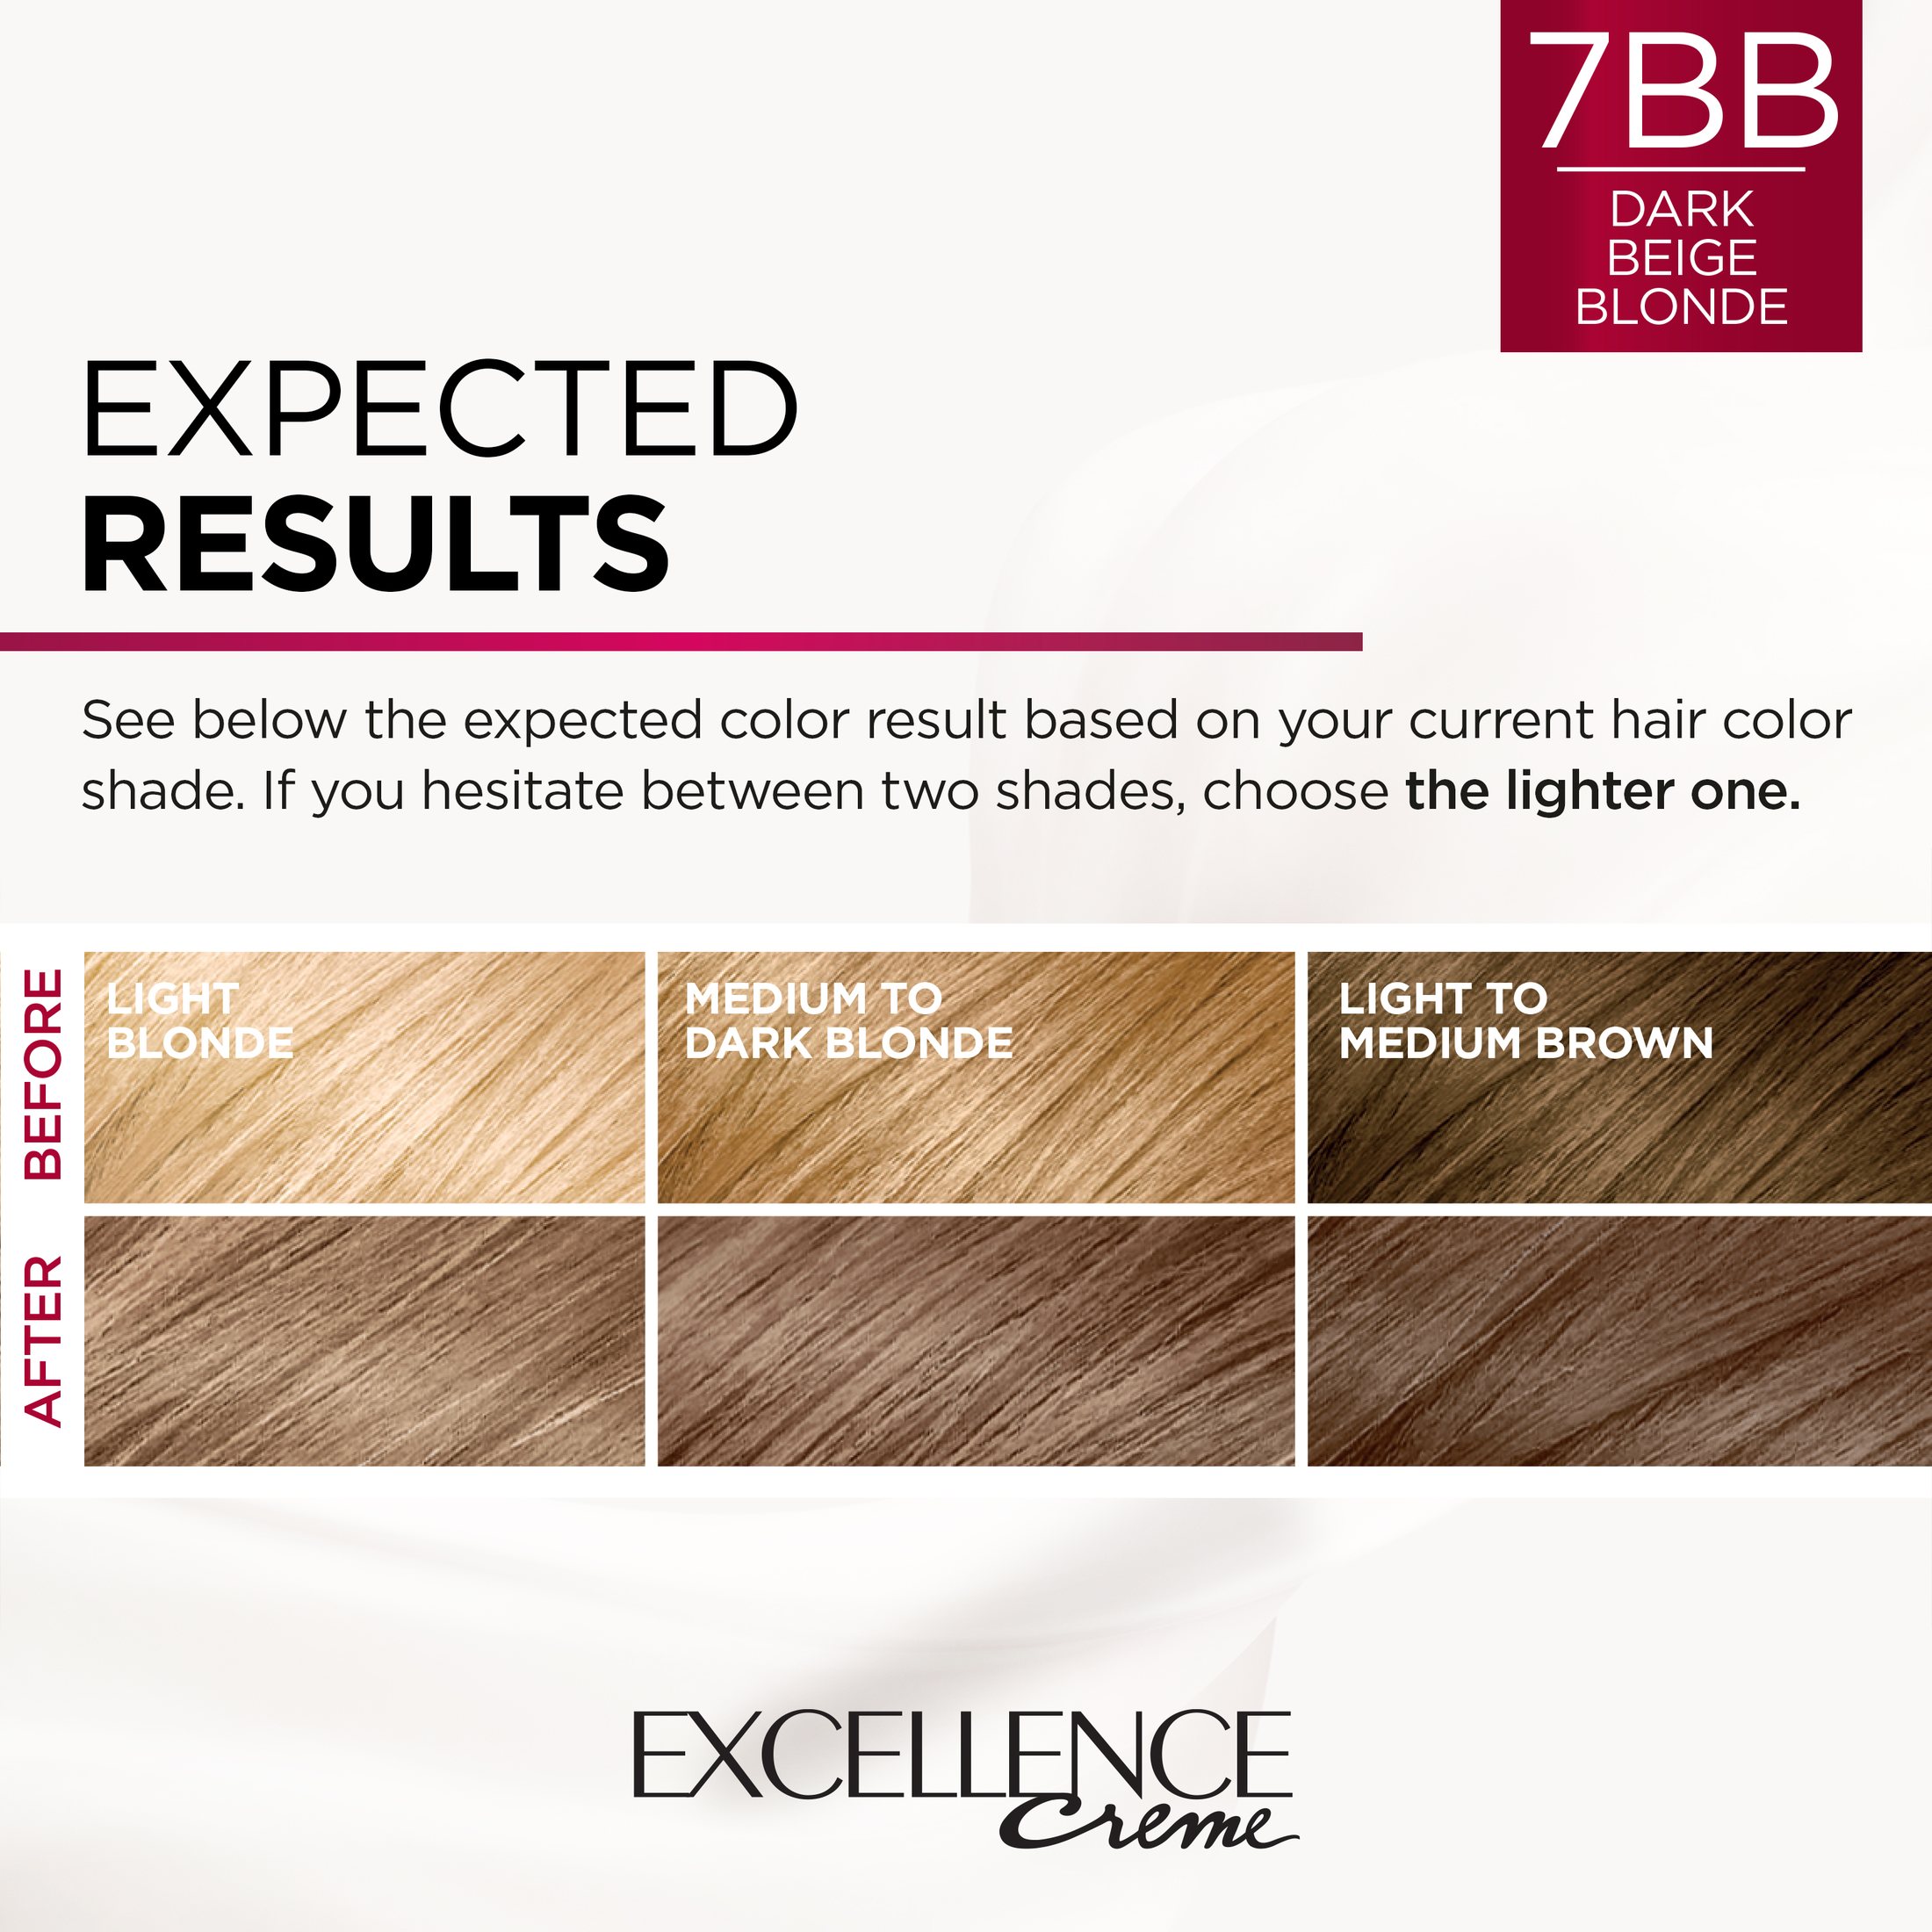 L'Oreal Paris Excellence Creme Permanent Hair Color, 7BB Dark Beige Blonde - image 5 of 8